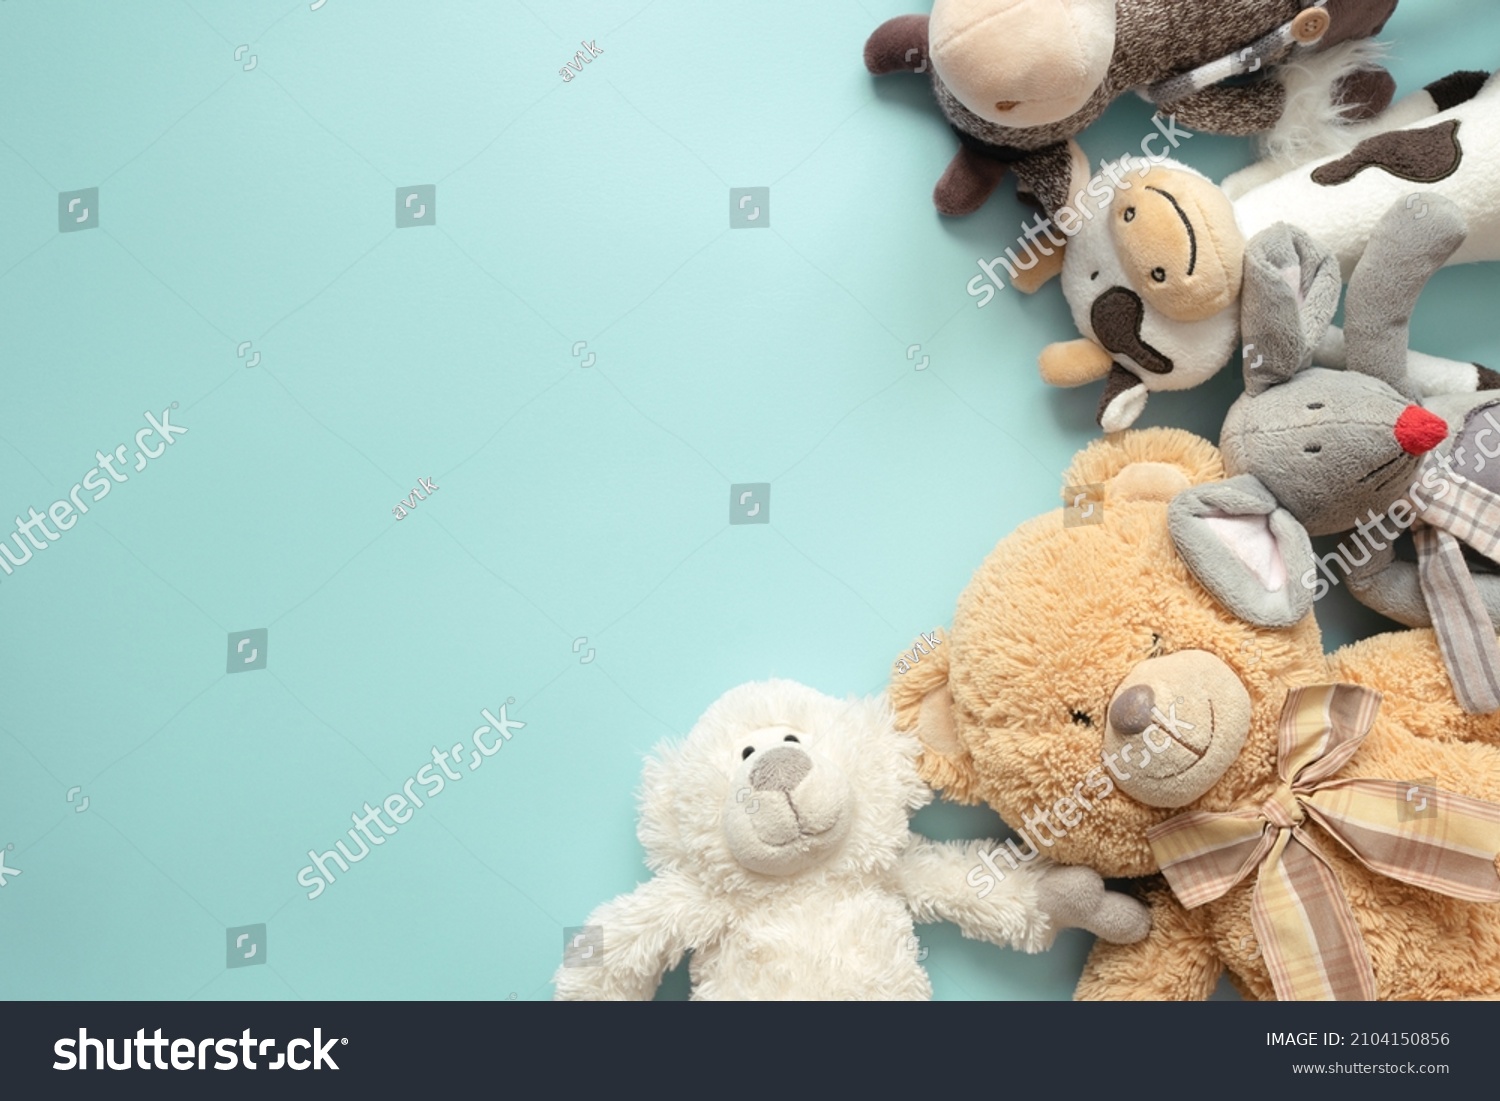 children's plush toys. top view #2104150856